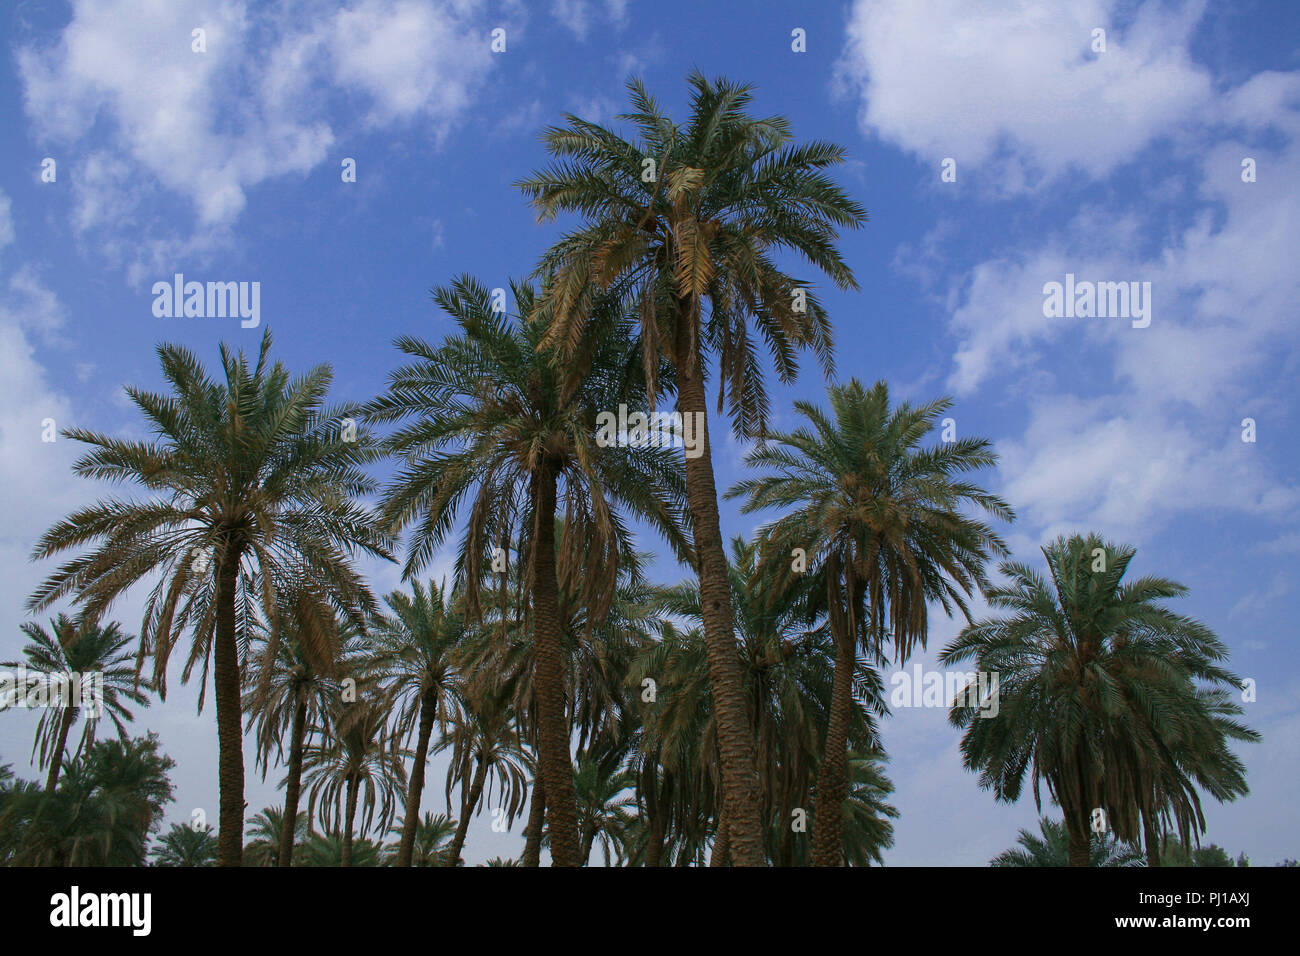 Palm trees in the desert, Saudi Arabia Stock Photo